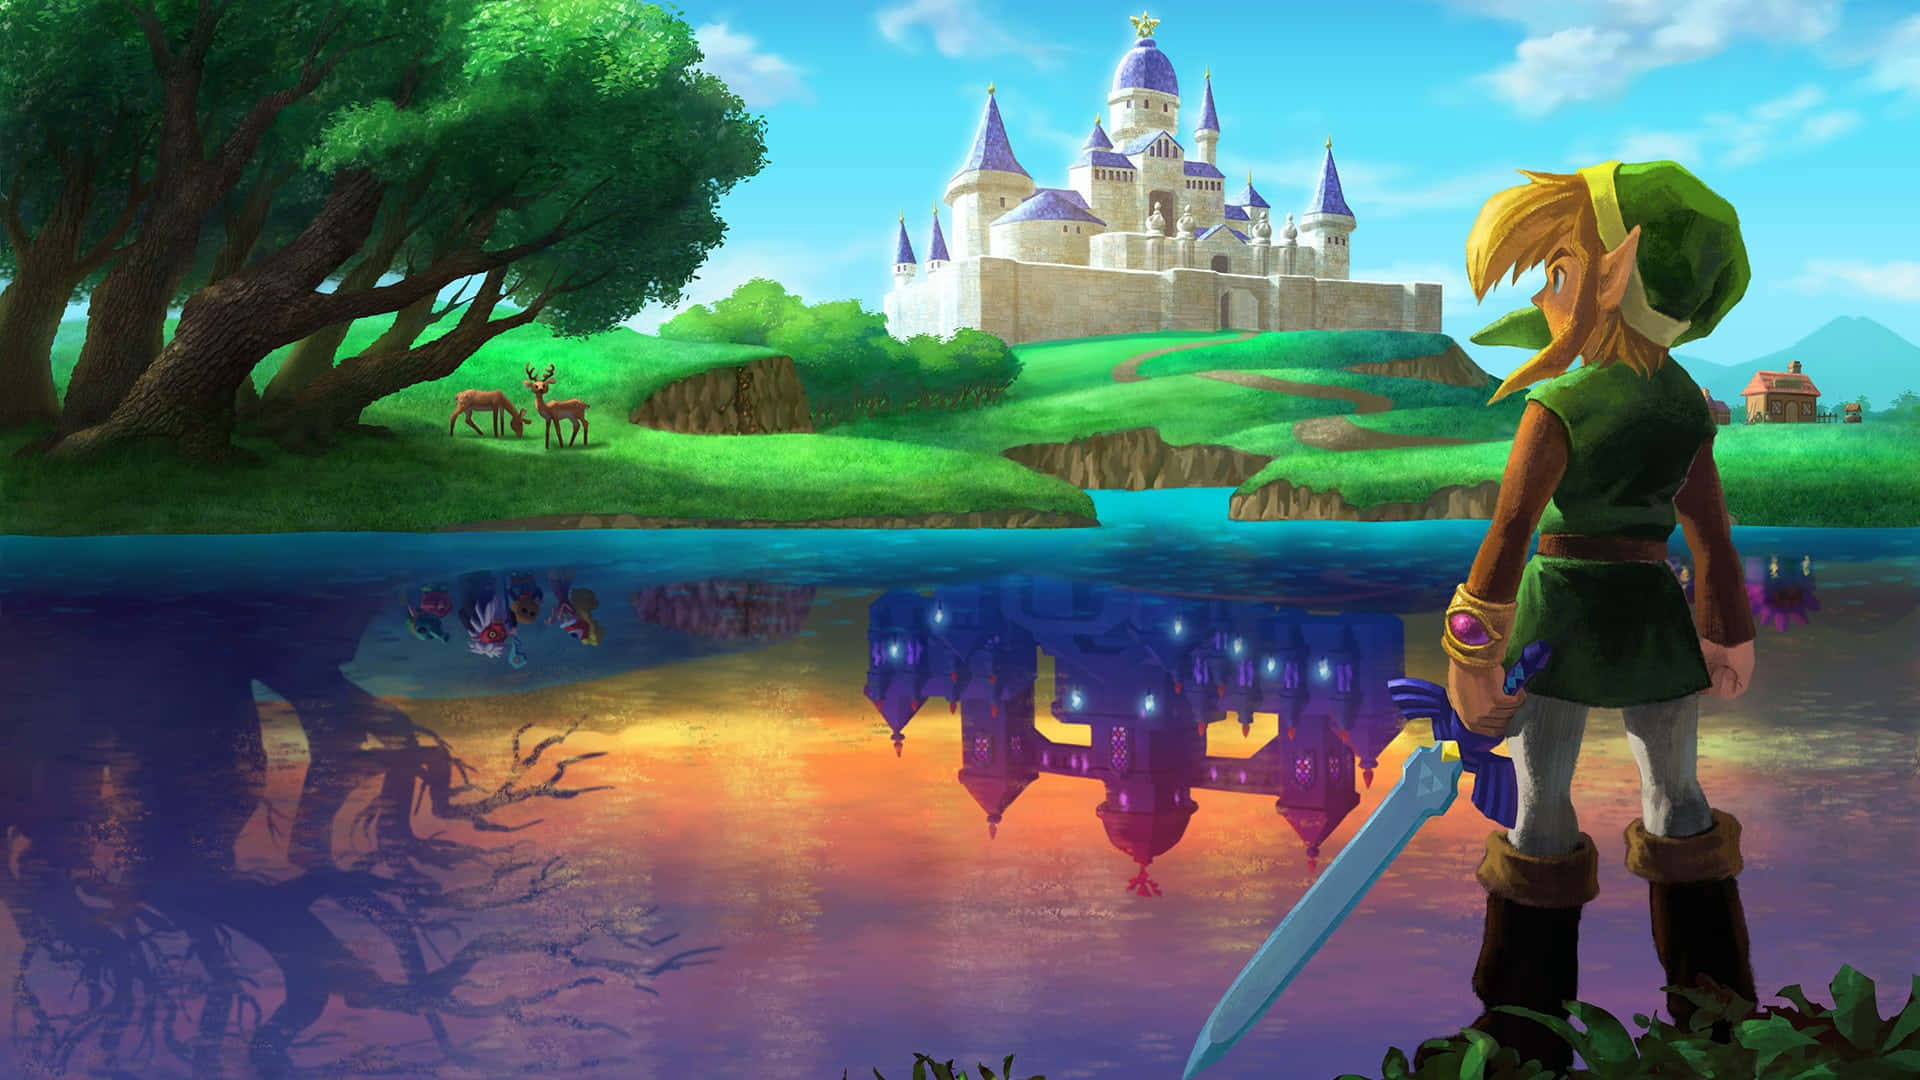 Link ready to explore the mythological world of The Legend of Zelda